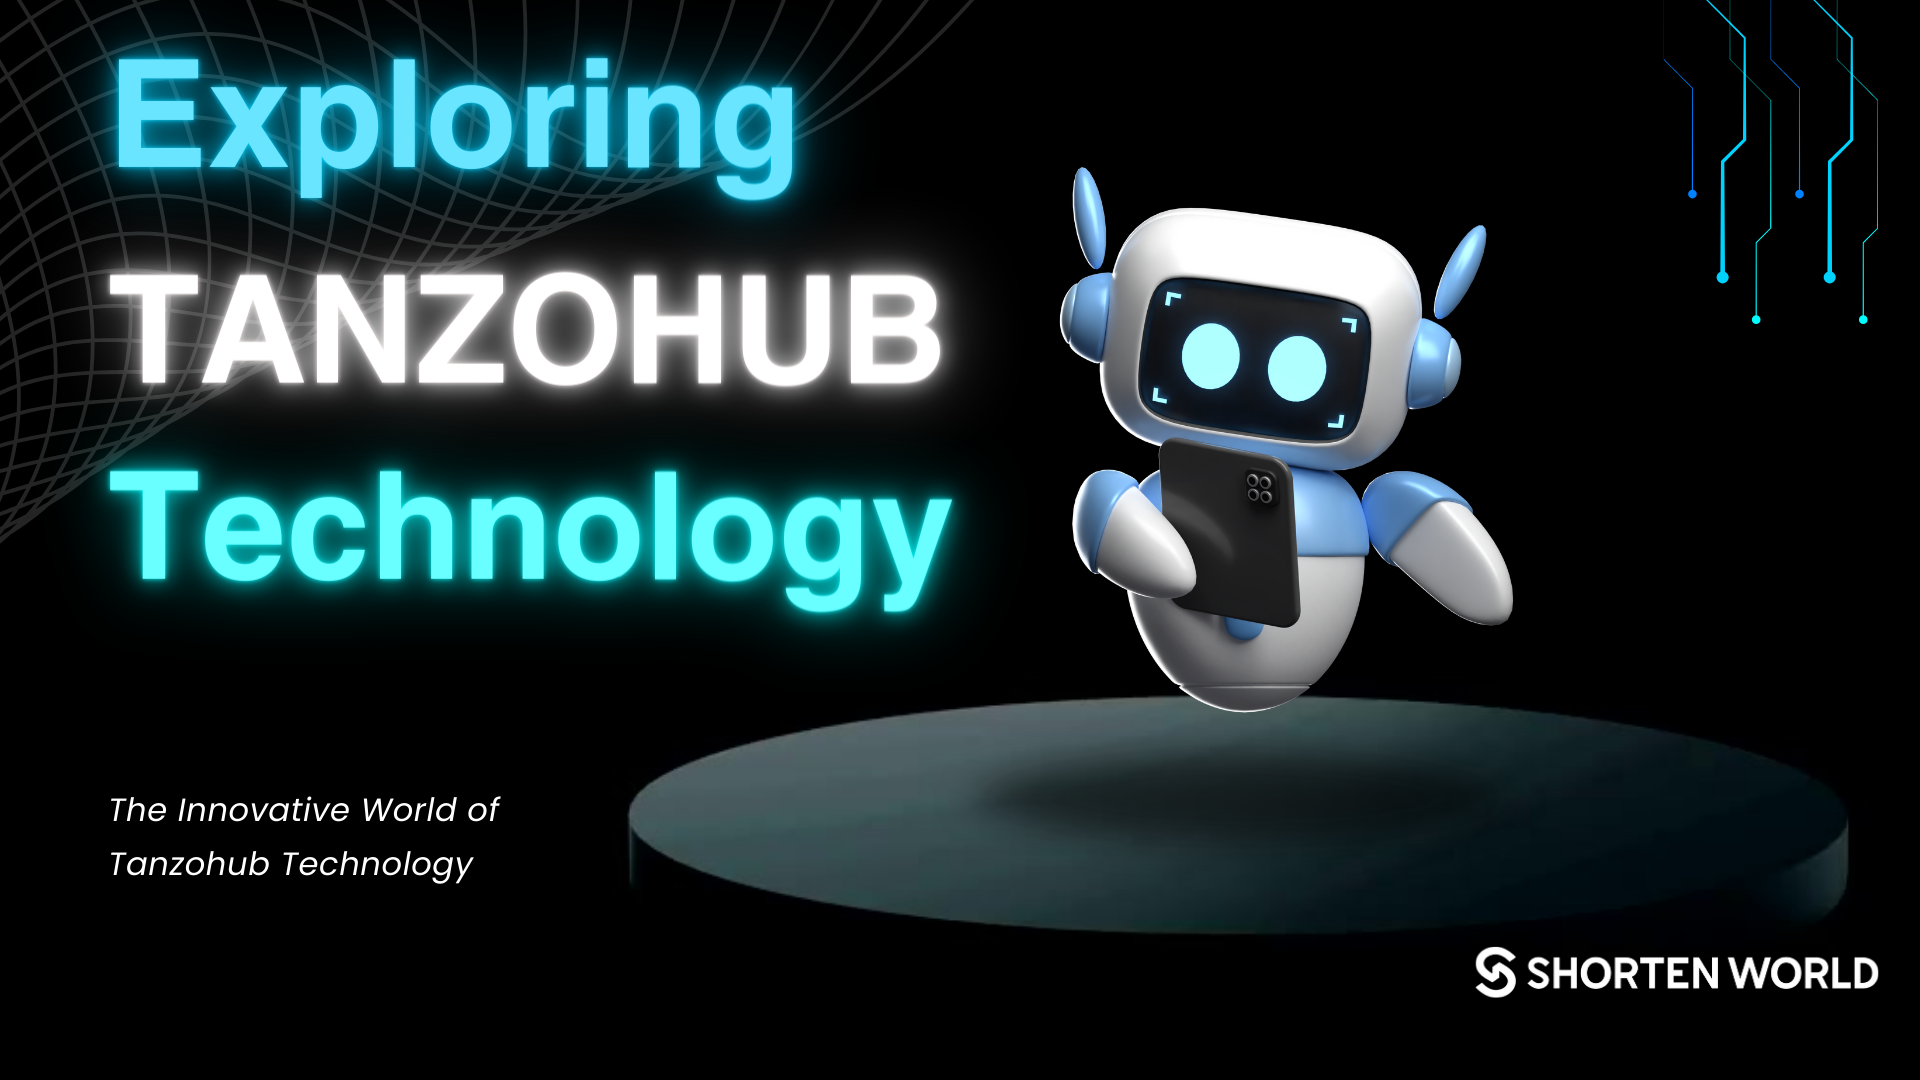 Tanzohub: Exploring the Innovative World of Tanzohub Technology